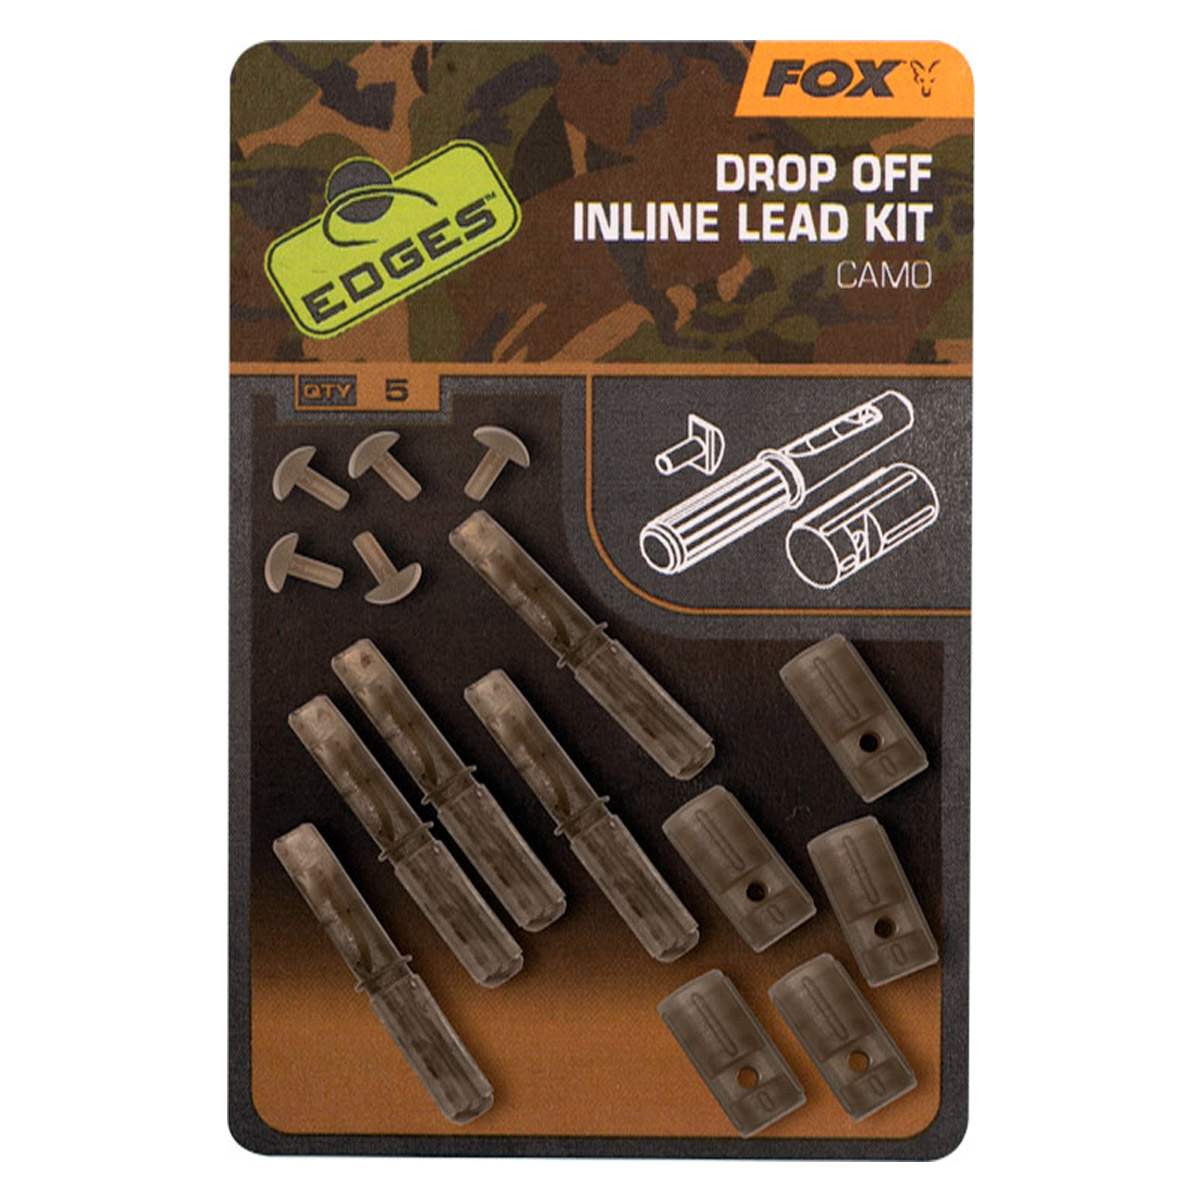 Fox Edges Camo Inline Lead Drop Off Kits